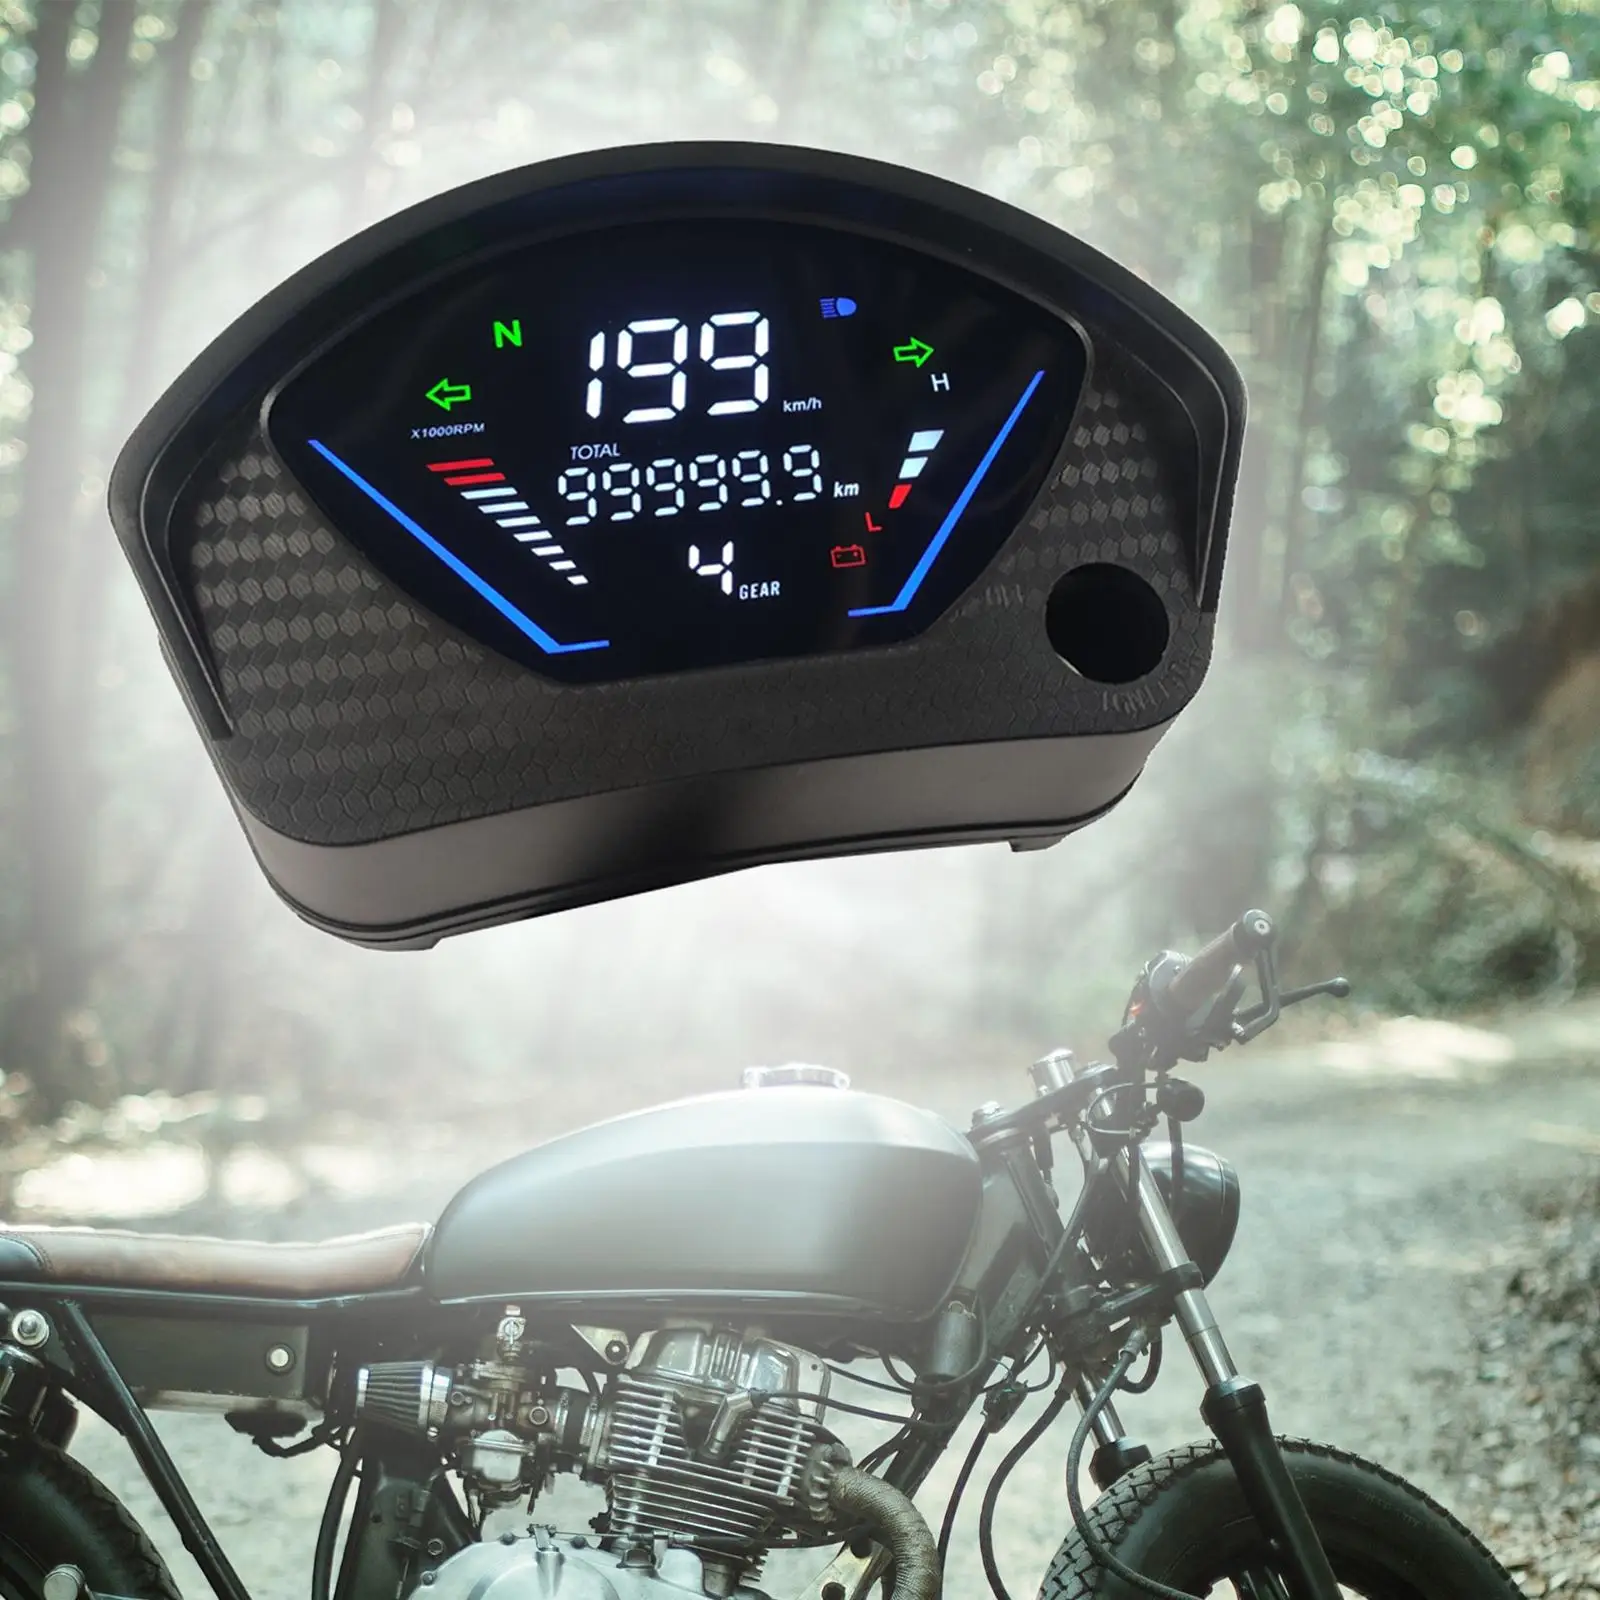 Motorcycle Digital Speedometer Fuel Level Display 199 Kph MPH Meters for Honda CD70 Waterproof Sturdy Replace Parts Stylish